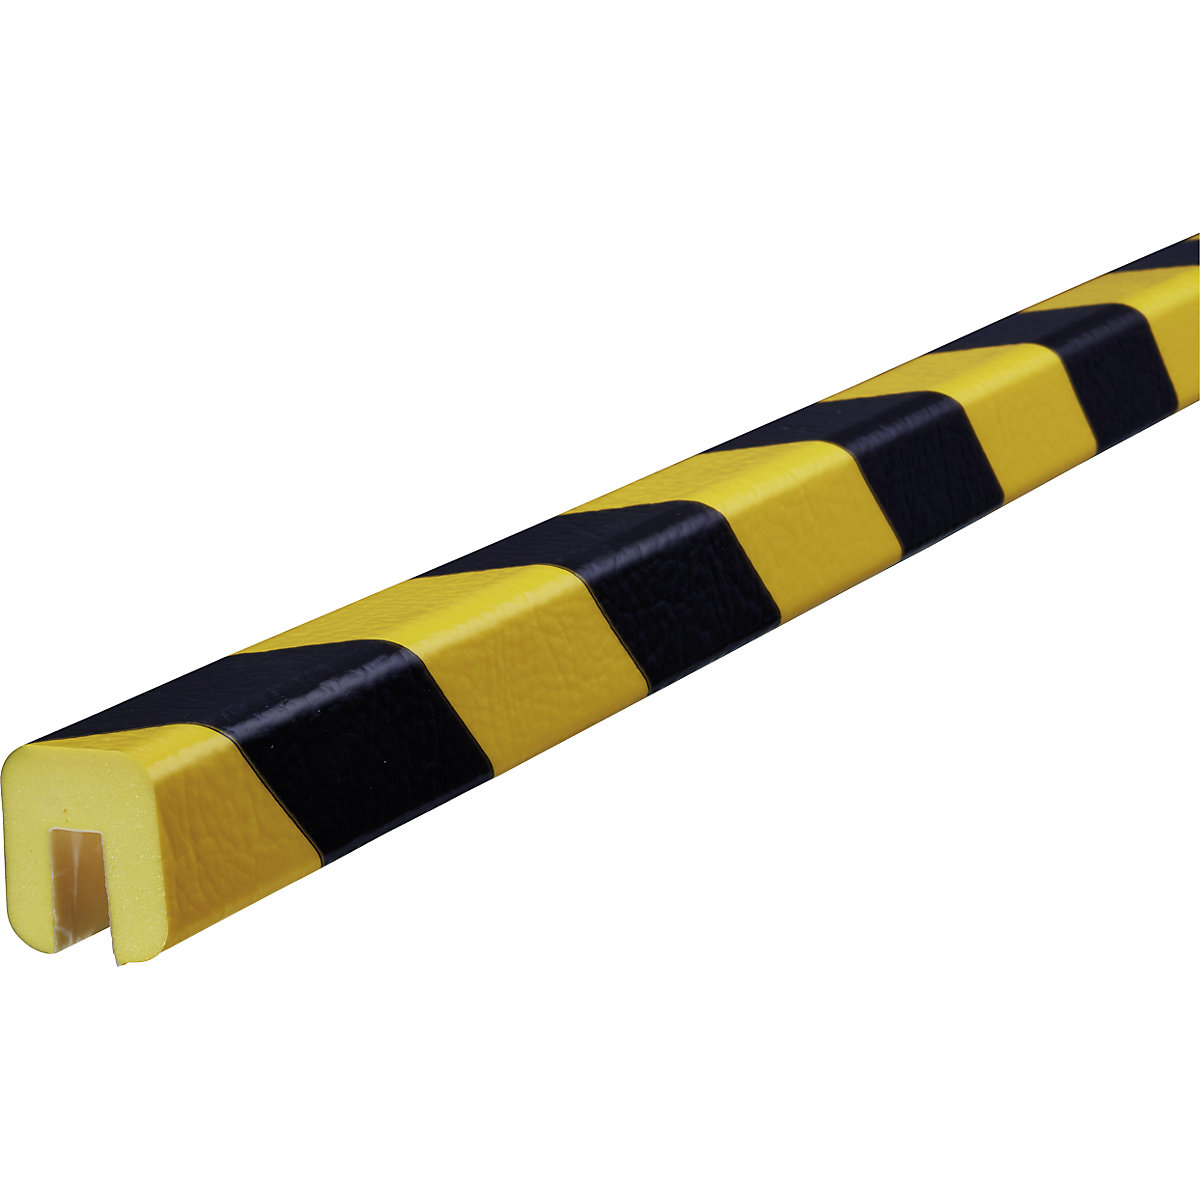 Proteção de rebordos Knuffi® – SHG, tipo G, corte individual, por metro corrente, preto/amarelo-21